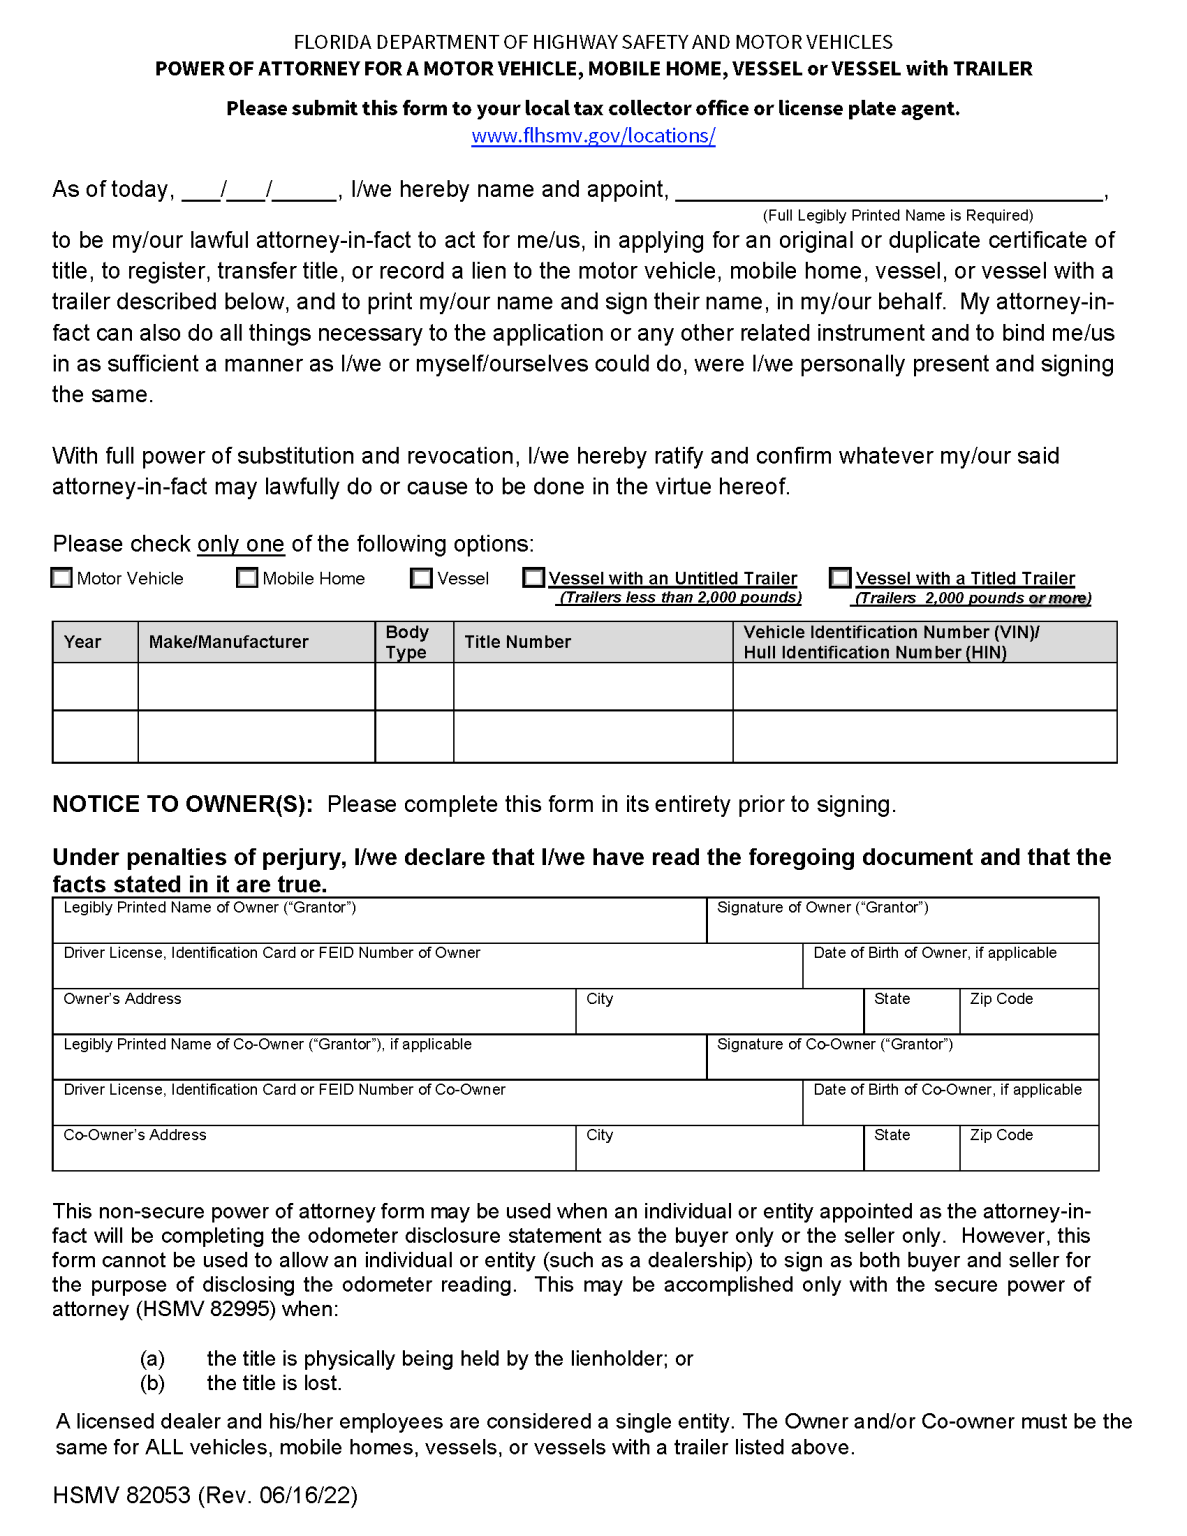 Free Florida Motor Vehicle Power of Attorney (Form HSMV 82053) PDF